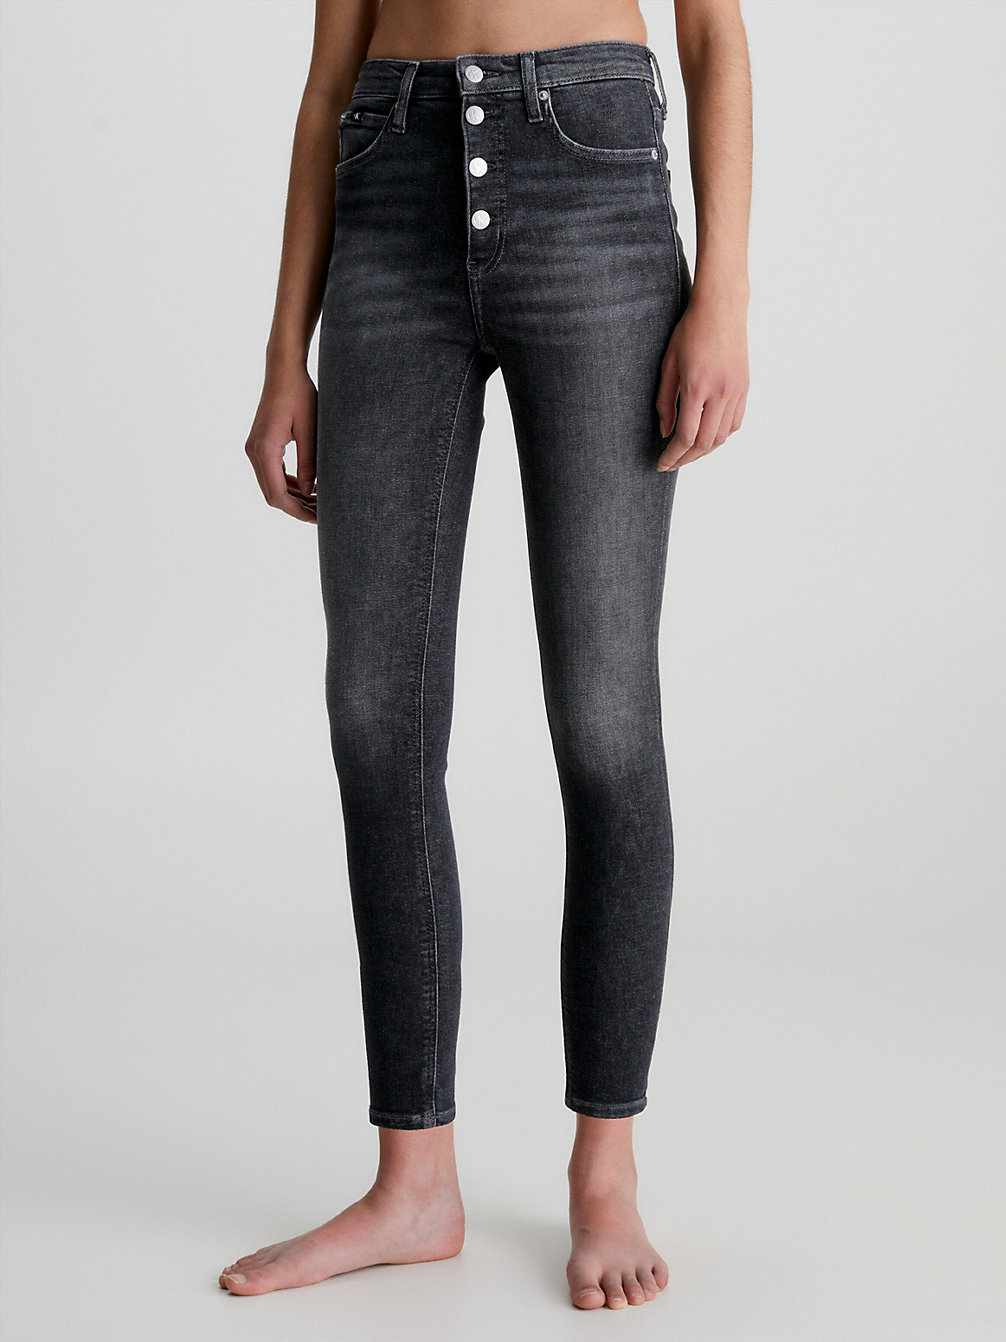 High Rise Super Skinny Jeans Alla Caviglia > DENIM GREY > undefined donna > Calvin Klein